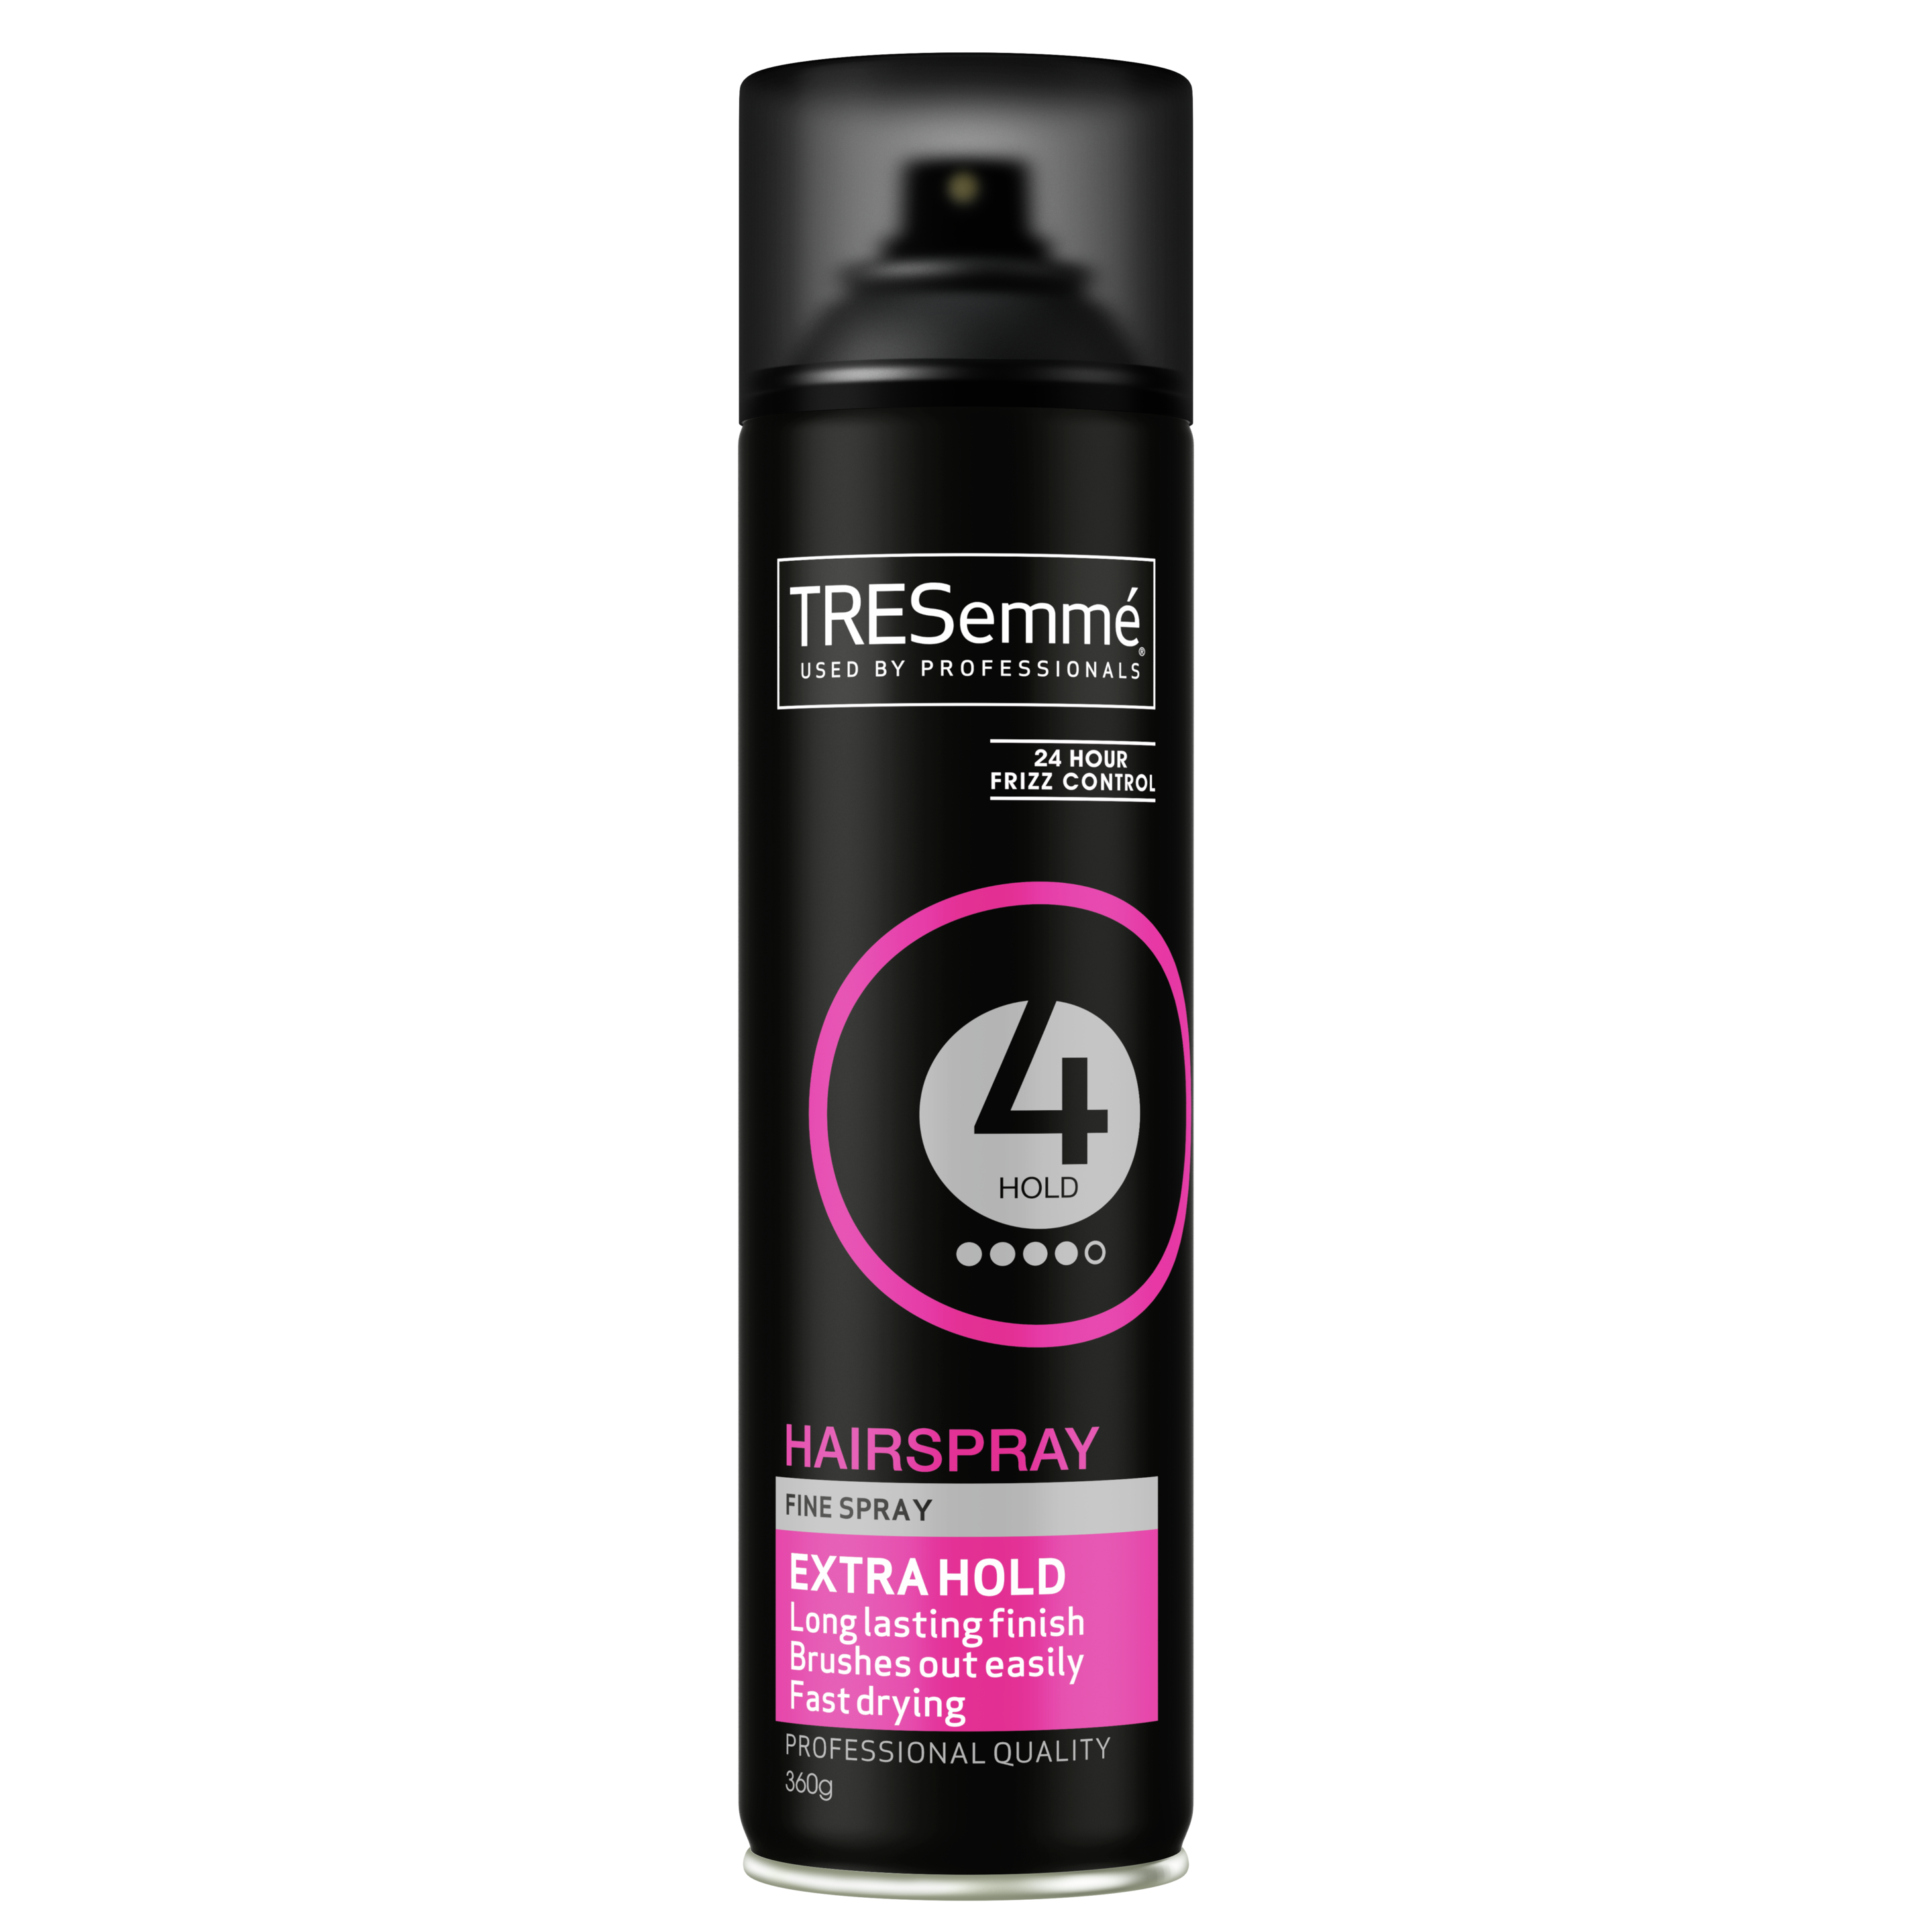 A 360g can of TRESemmé Salon Finish Extra Hold Hairspray